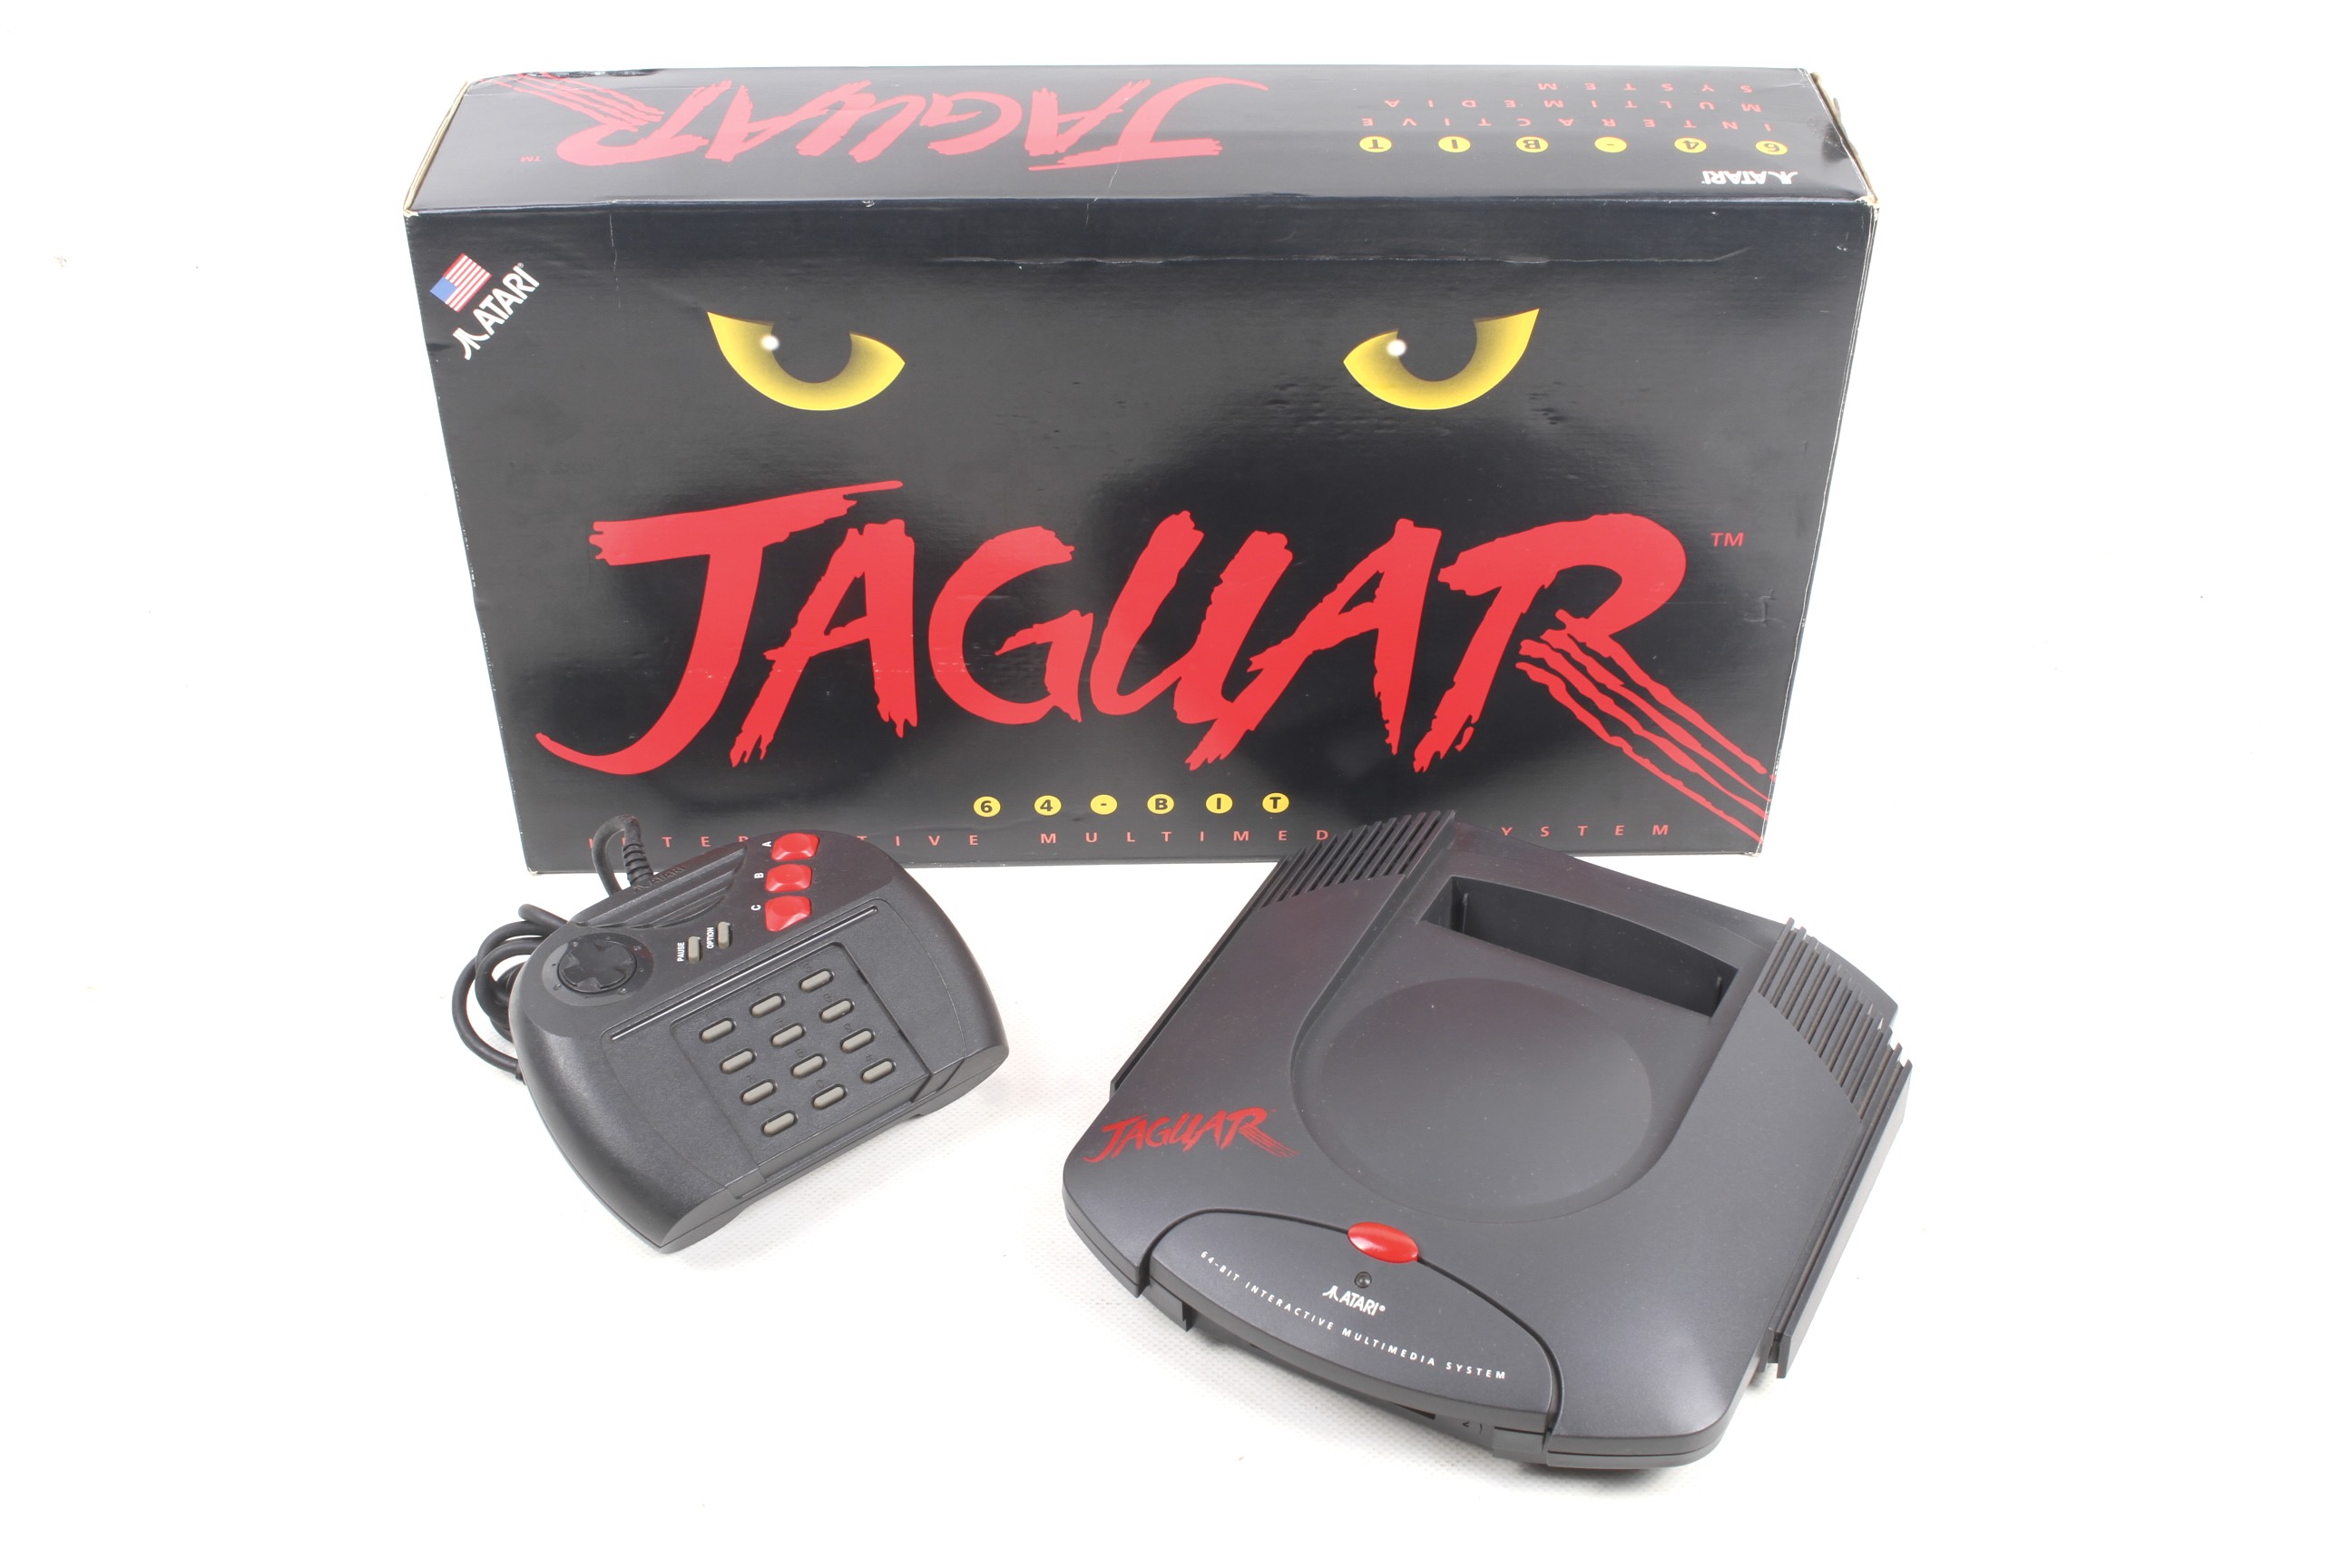 An Atari Jaguar interactive multimedia system.